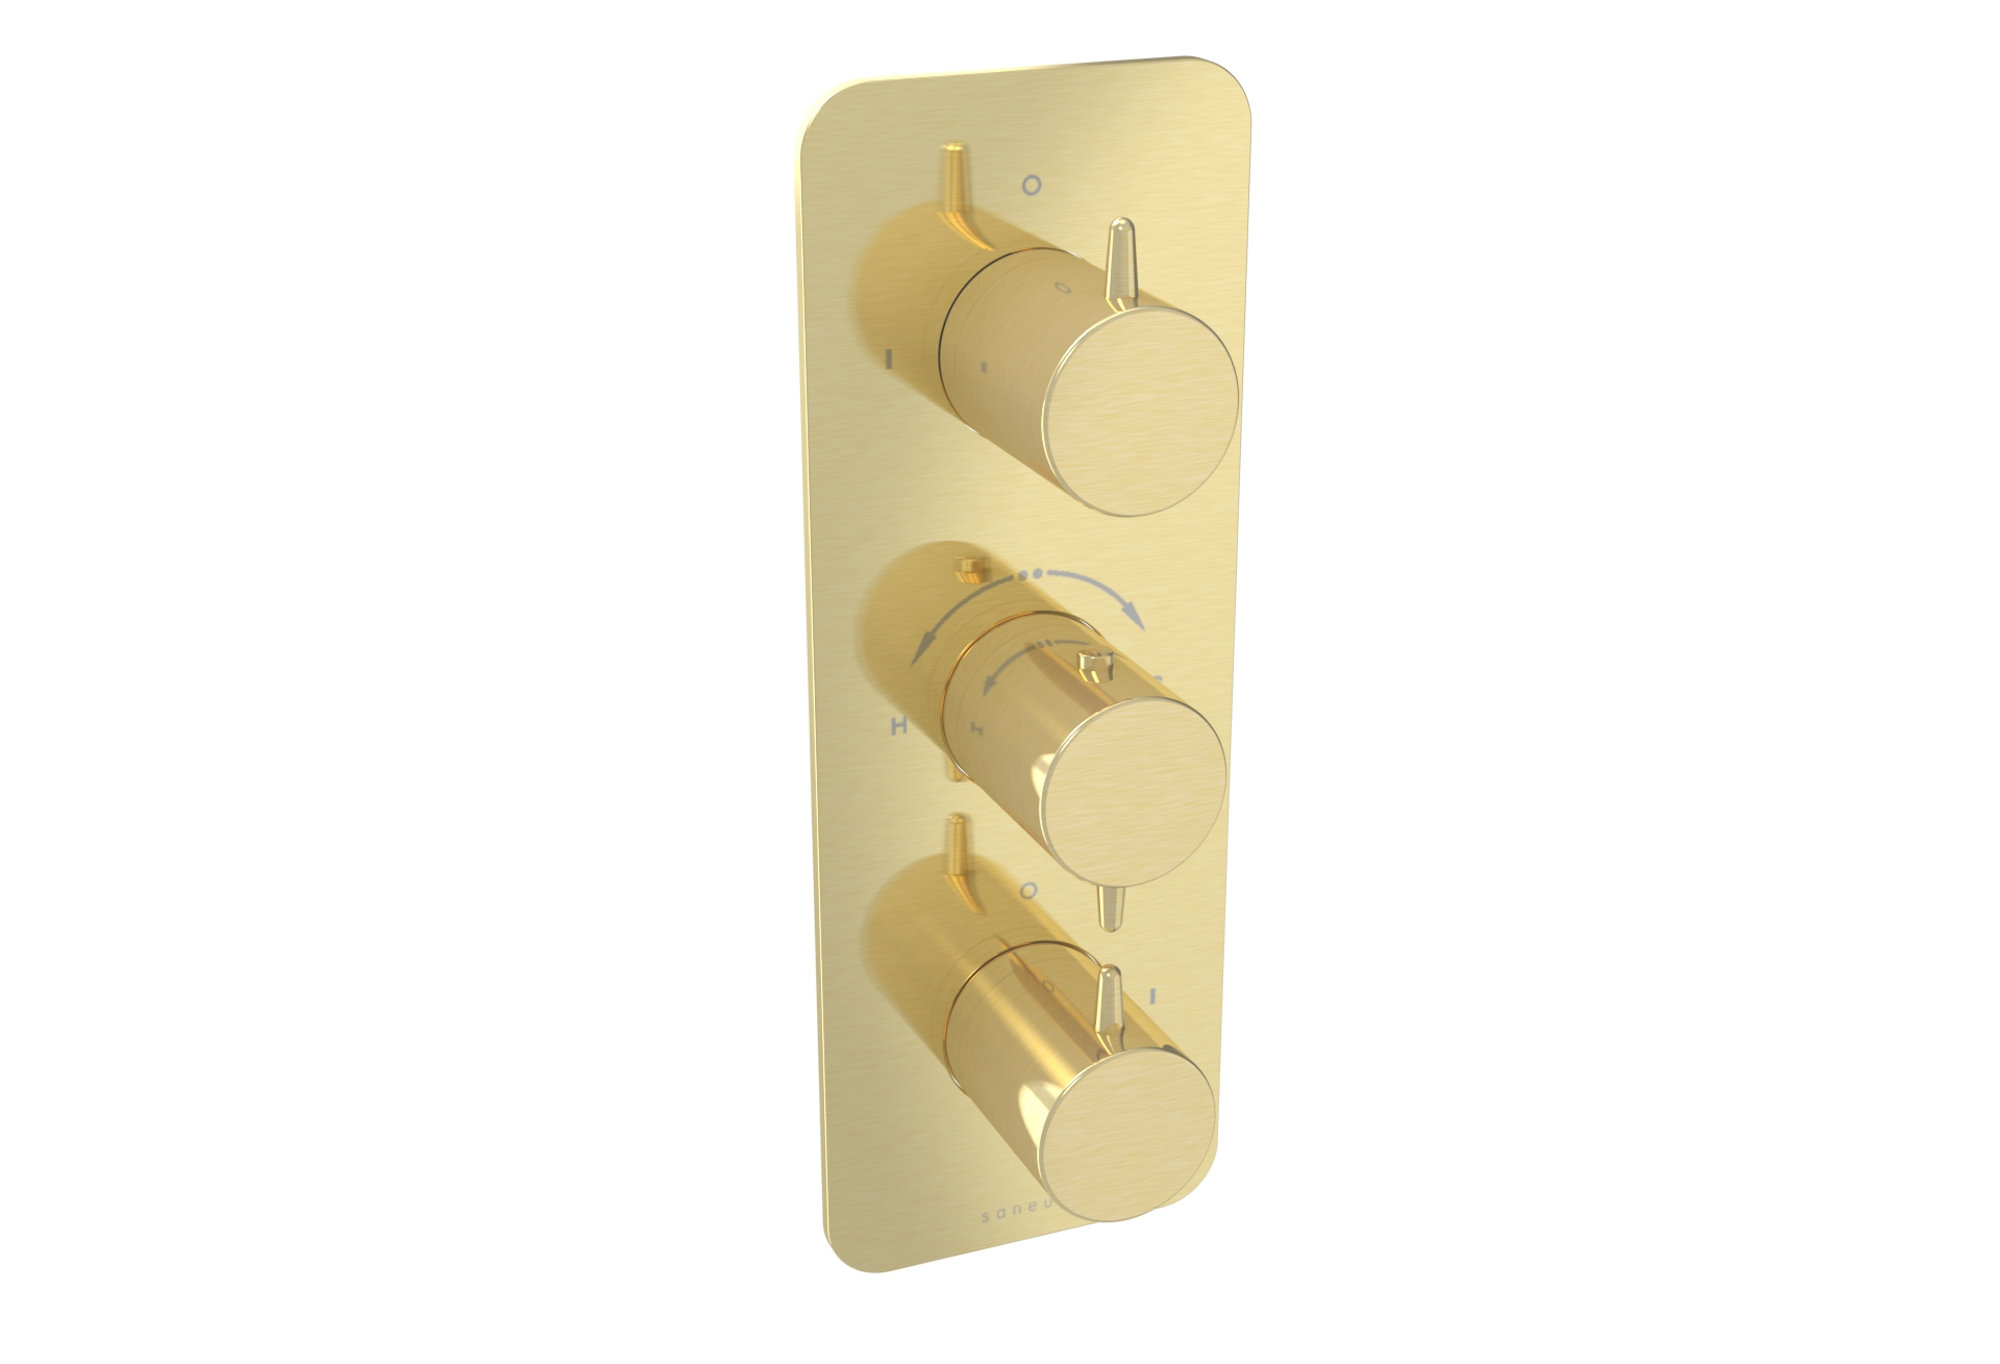 EDEN 3 way thermostatic shower valve kit in portrait - Brushed Brass